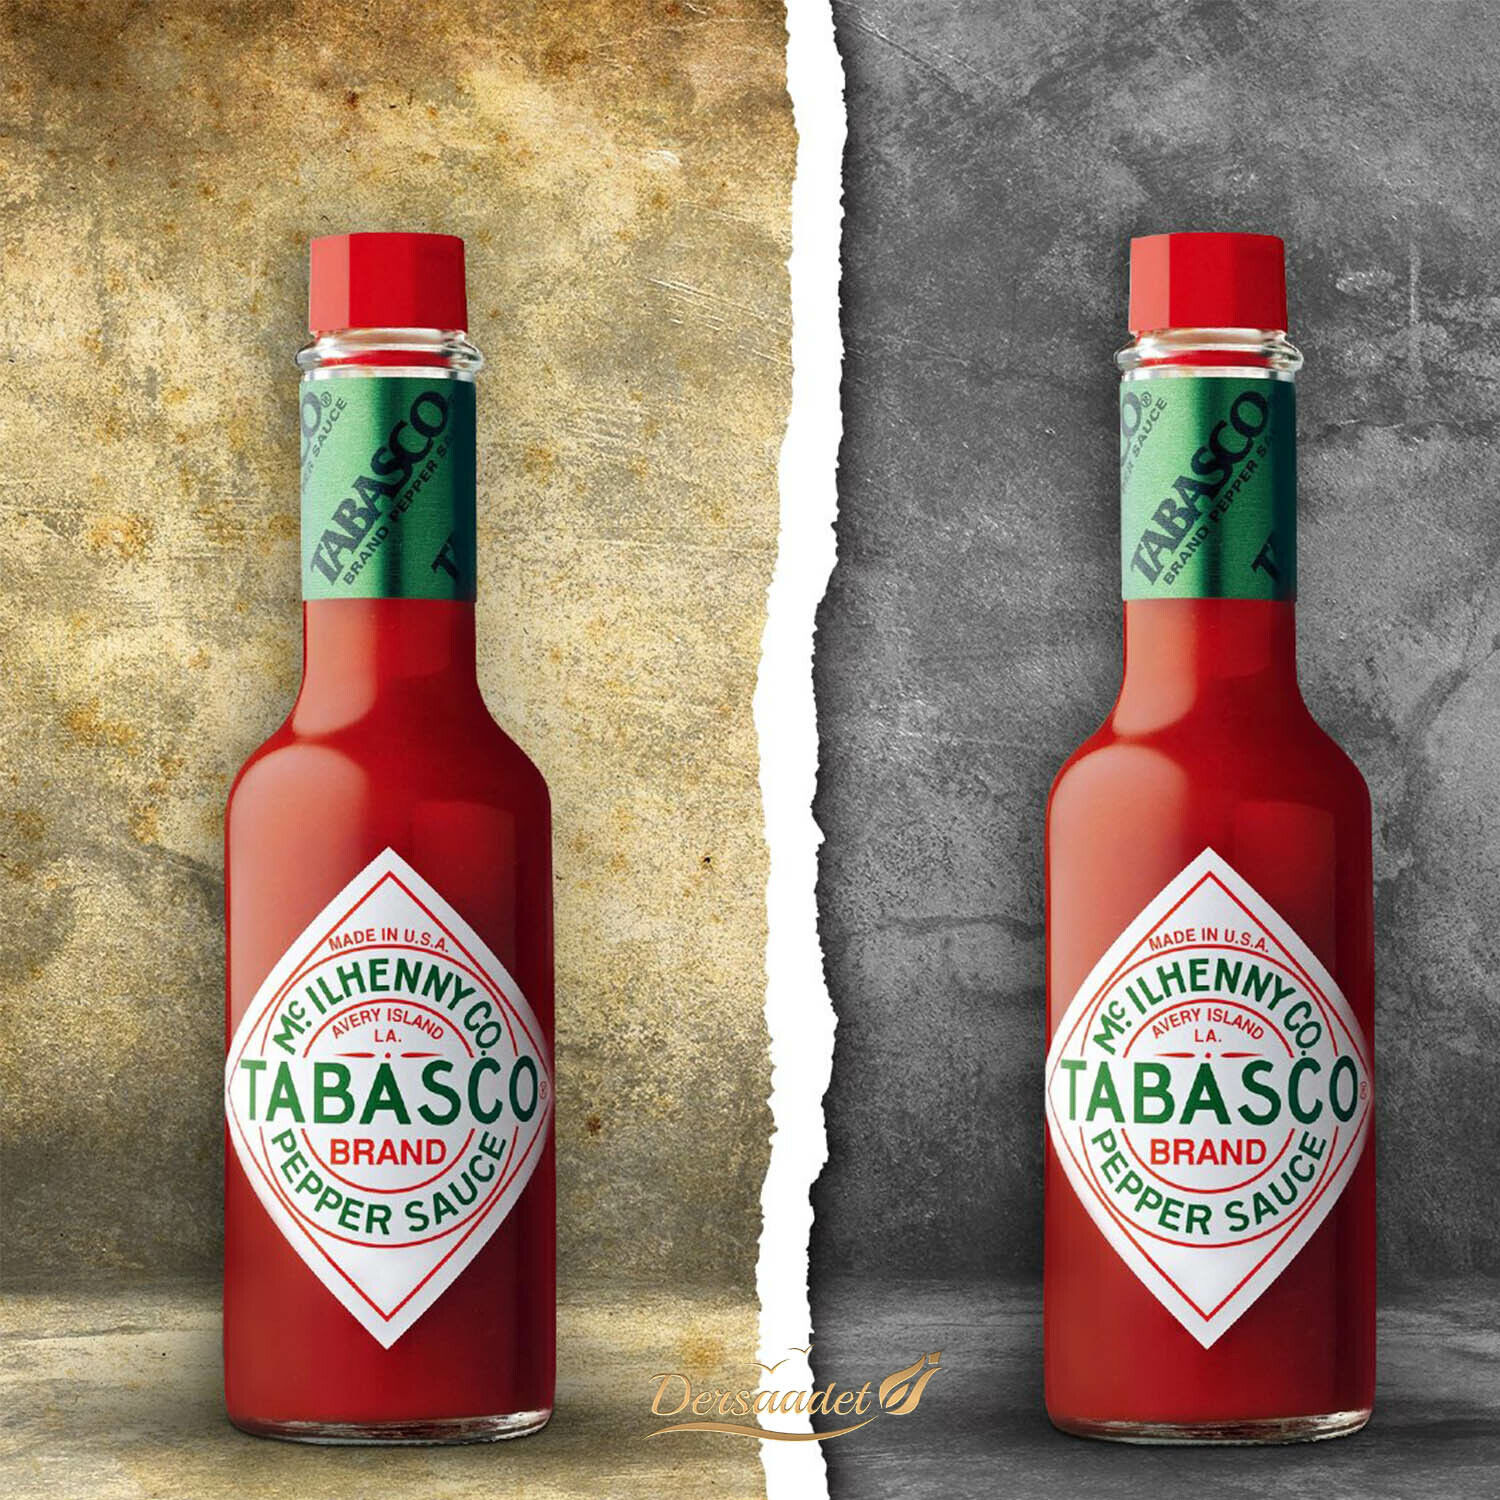 Tabasco Pepper Sauce 350ml 100% natural ingredients Sharp Chili Sauce